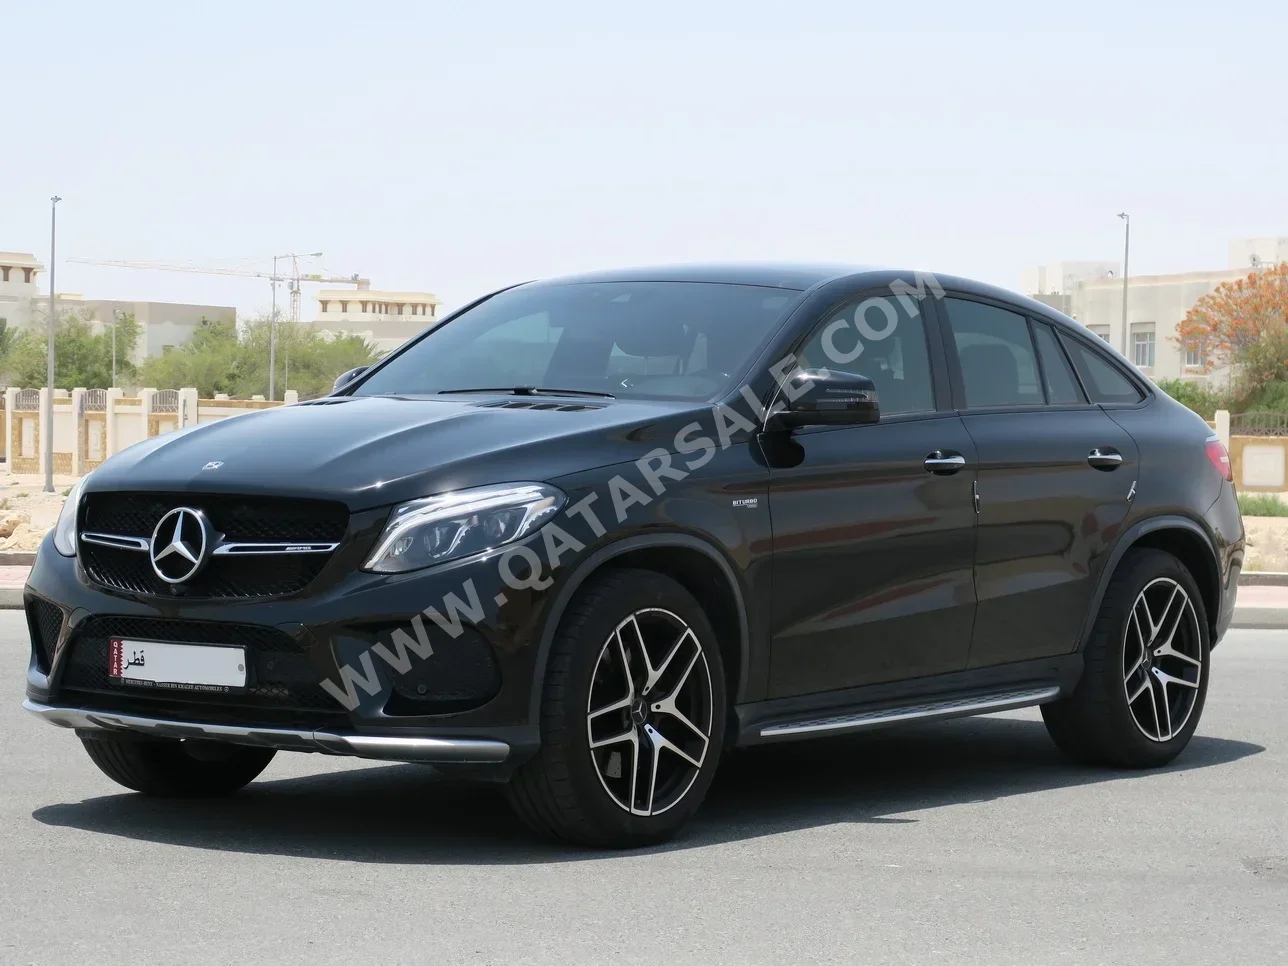 Mercedes-Benz  GLE  43 AMG  2019  Automatic  45,780 Km  6 Cylinder  Four Wheel Drive (4WD)  SUV  Black